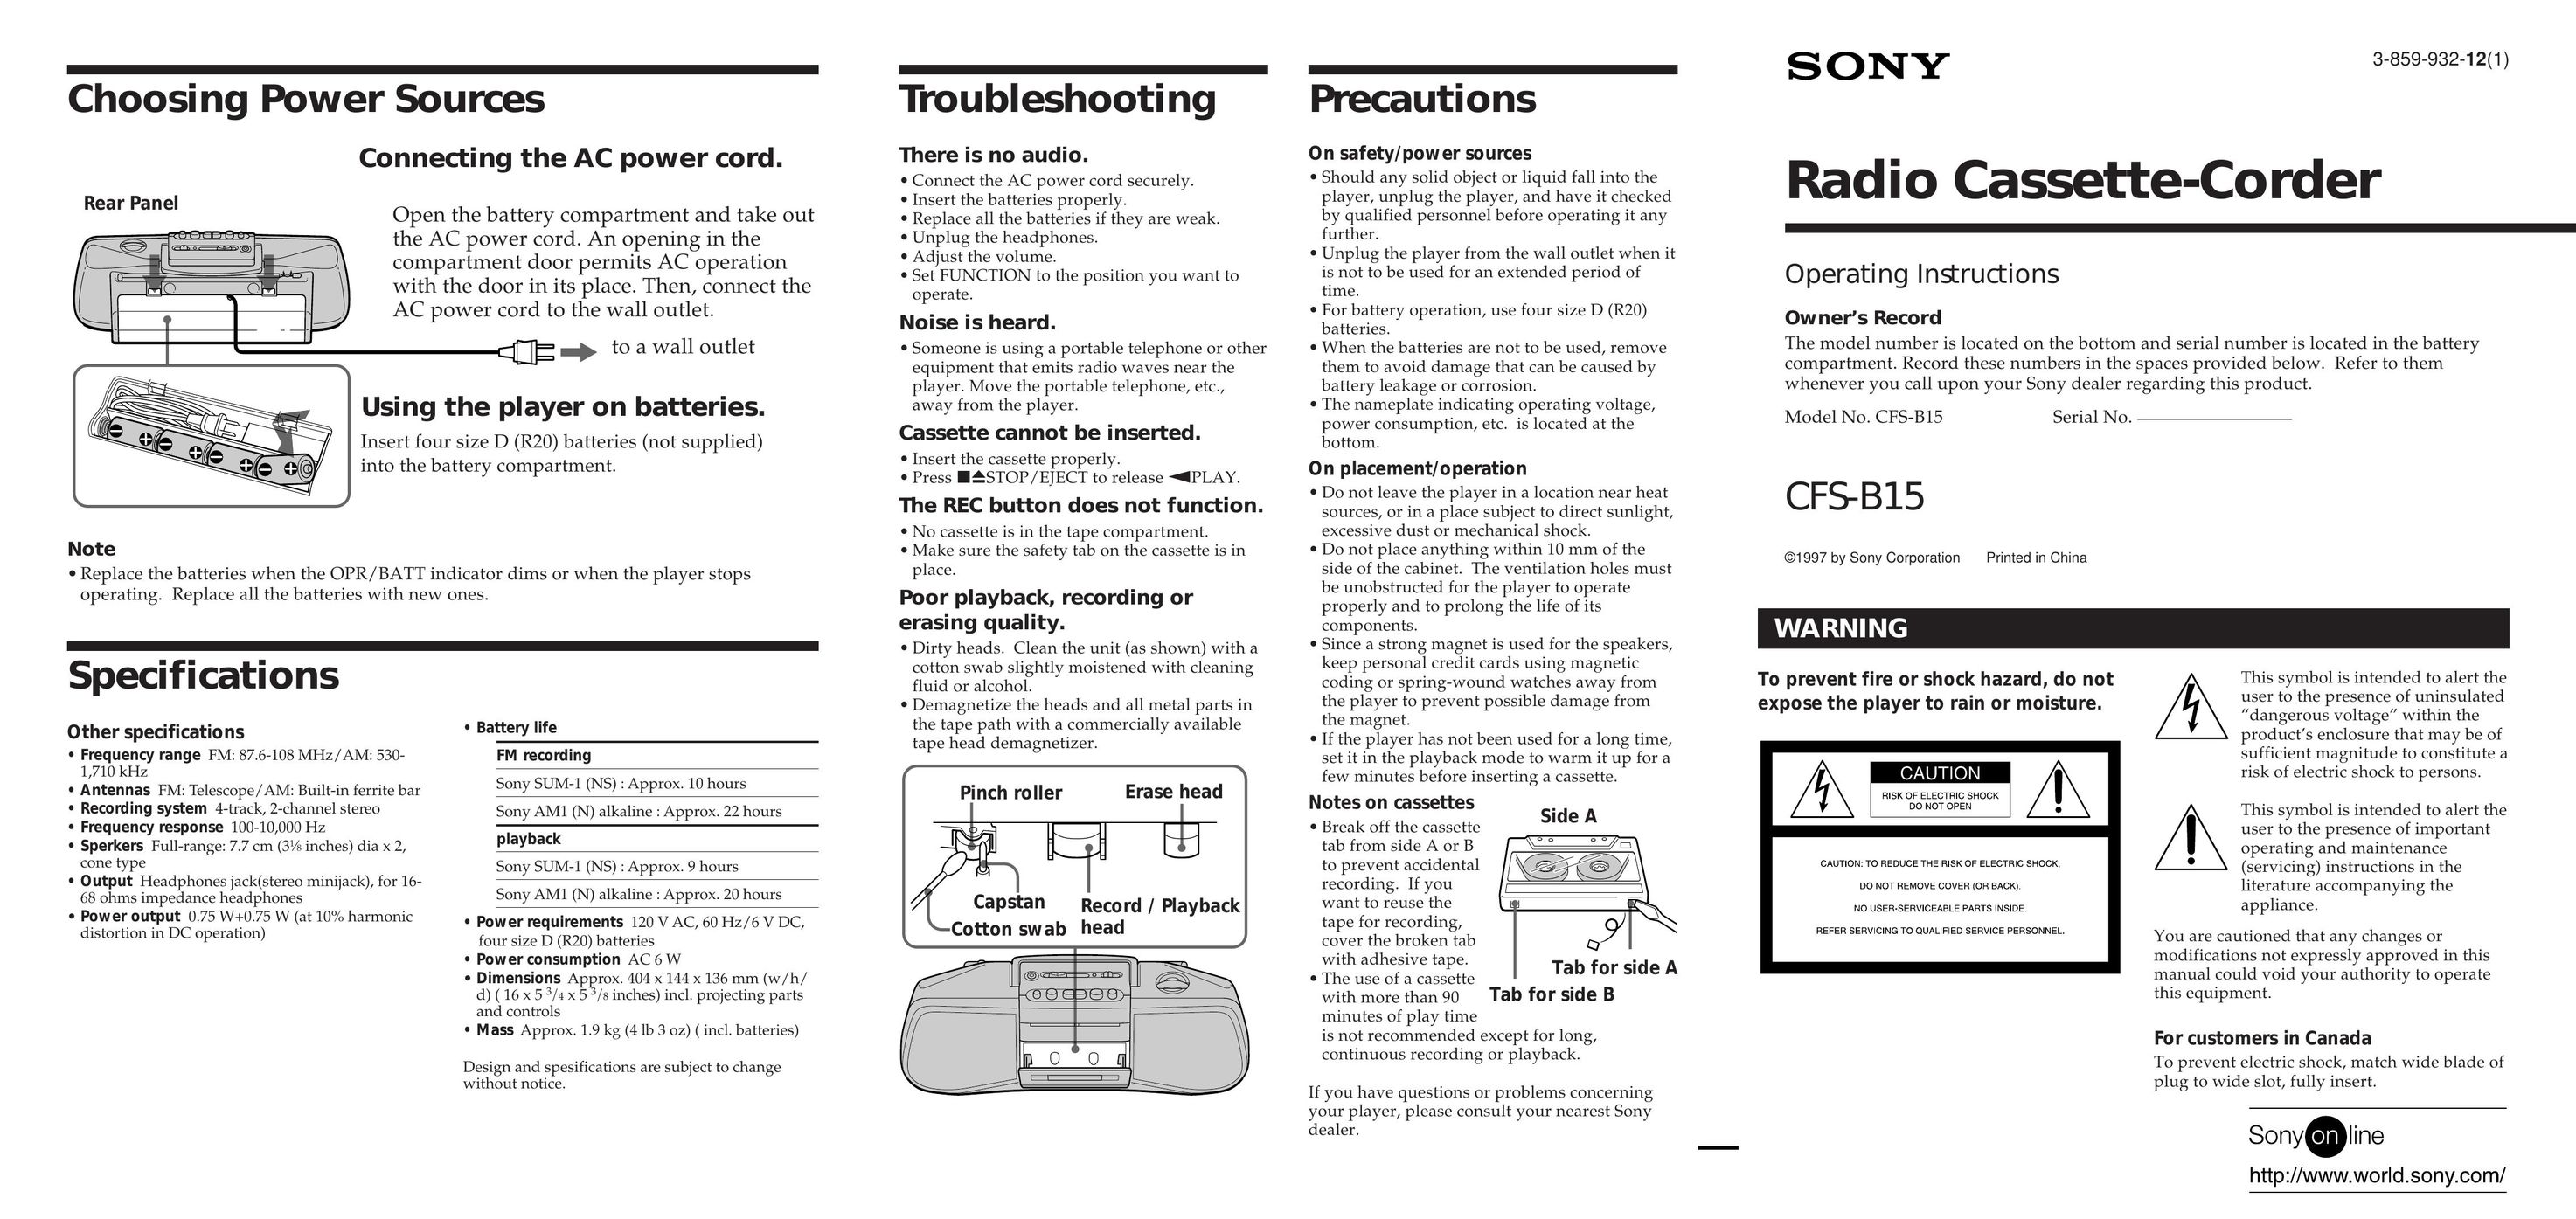 Sony CFS-B15 Cassette Player User Manual